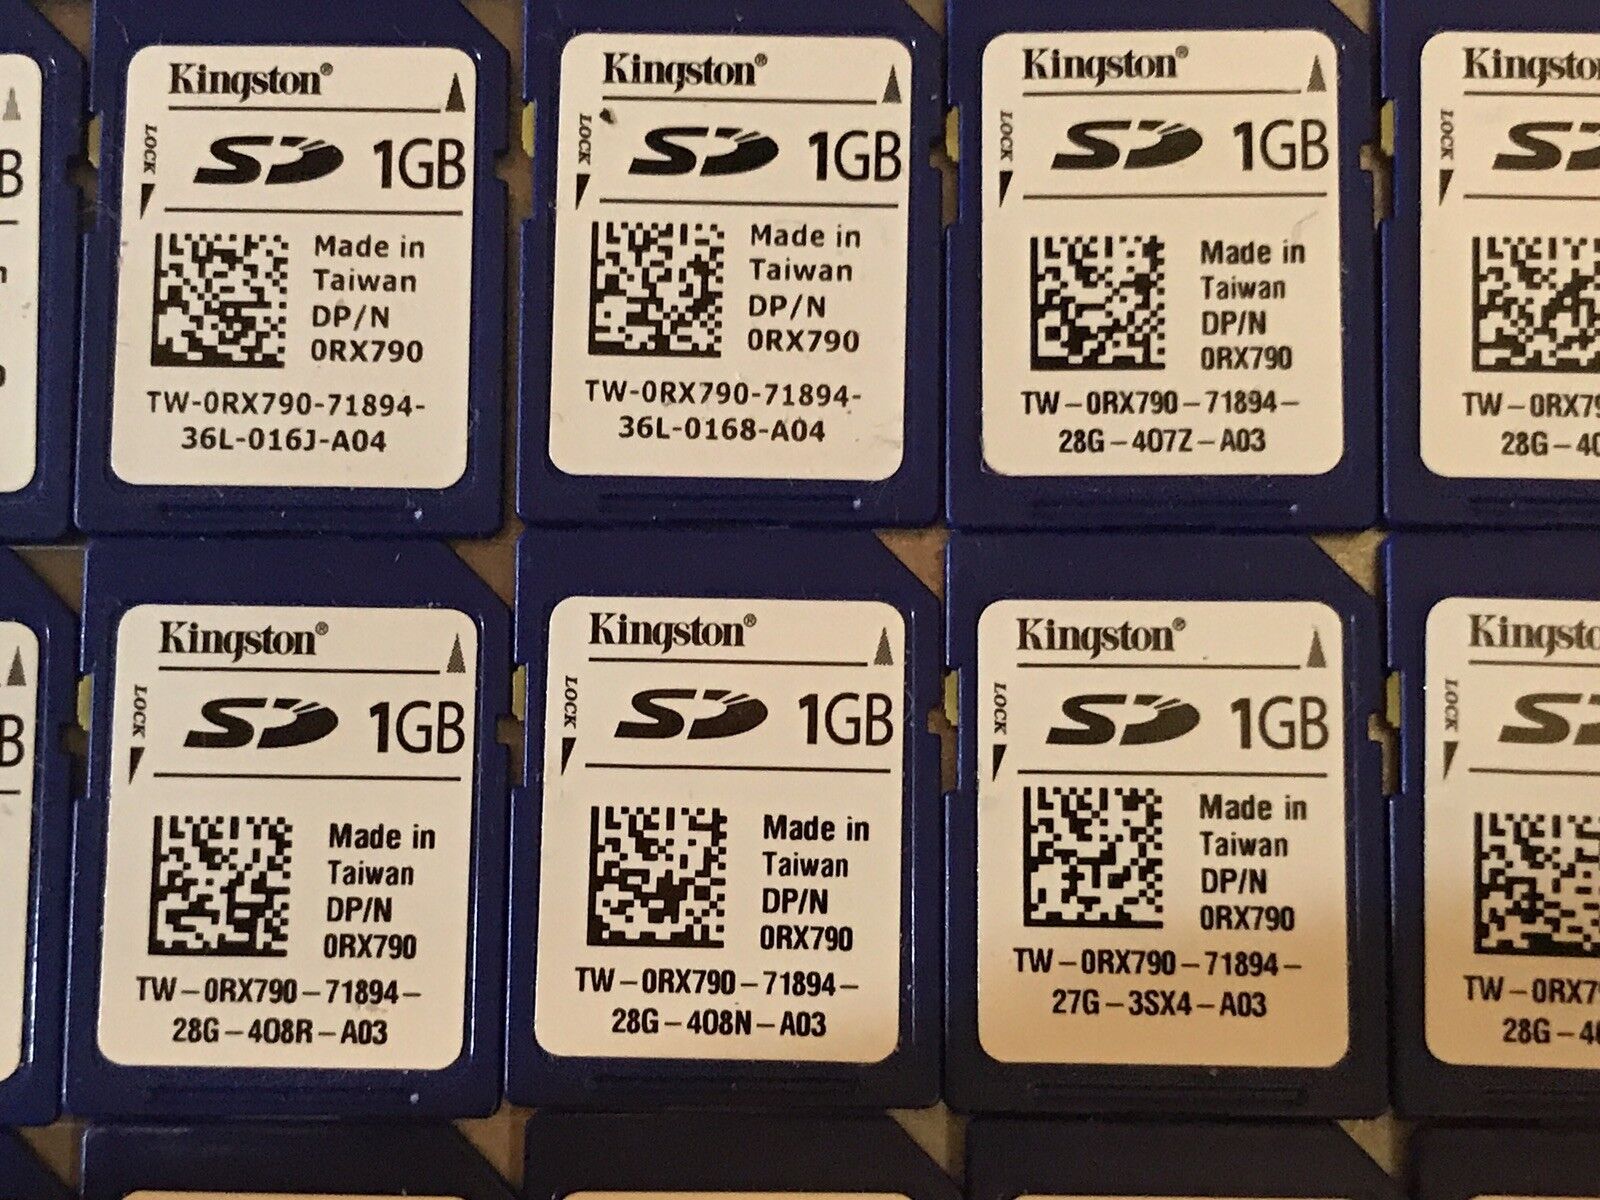 Dell Genuine 0RX790 Kingston RX790 1GB Flash SD Card Memory for Dual SD module.